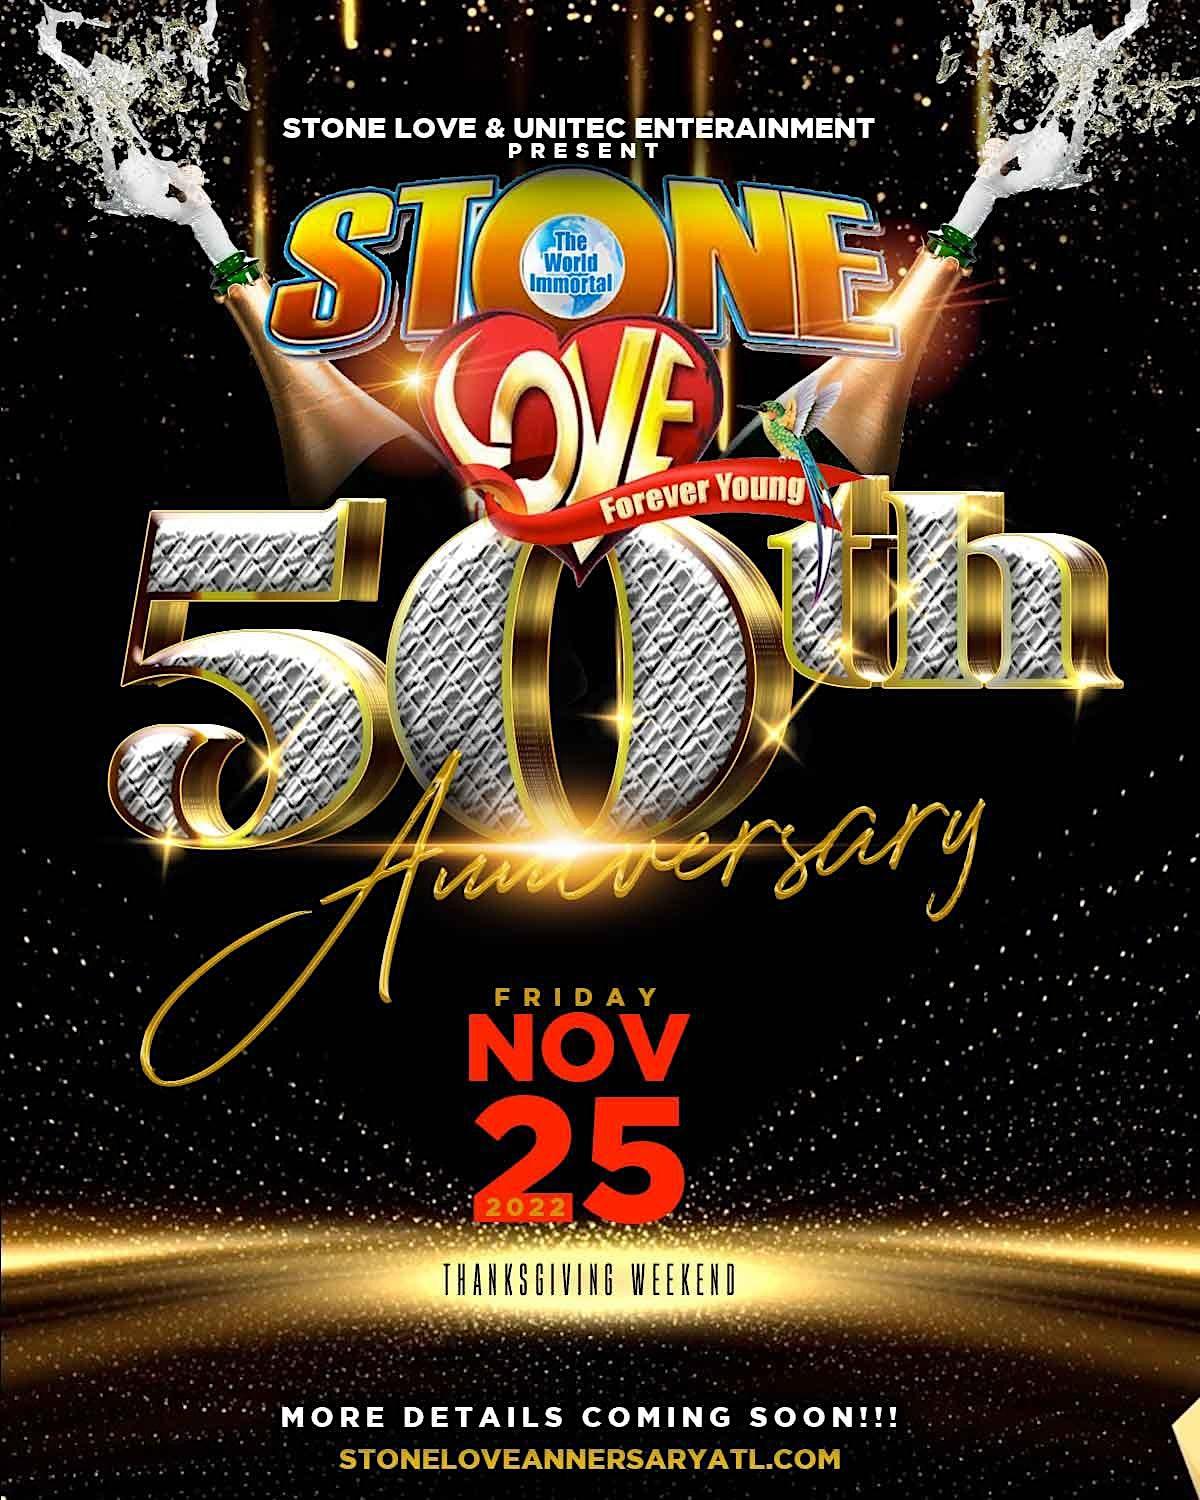 Stone Love 50th Anniversary Celebration- Atlanta
Fri Nov 25, 10:00 PM - Sat Nov 26, 4:00 AM
in 38 days